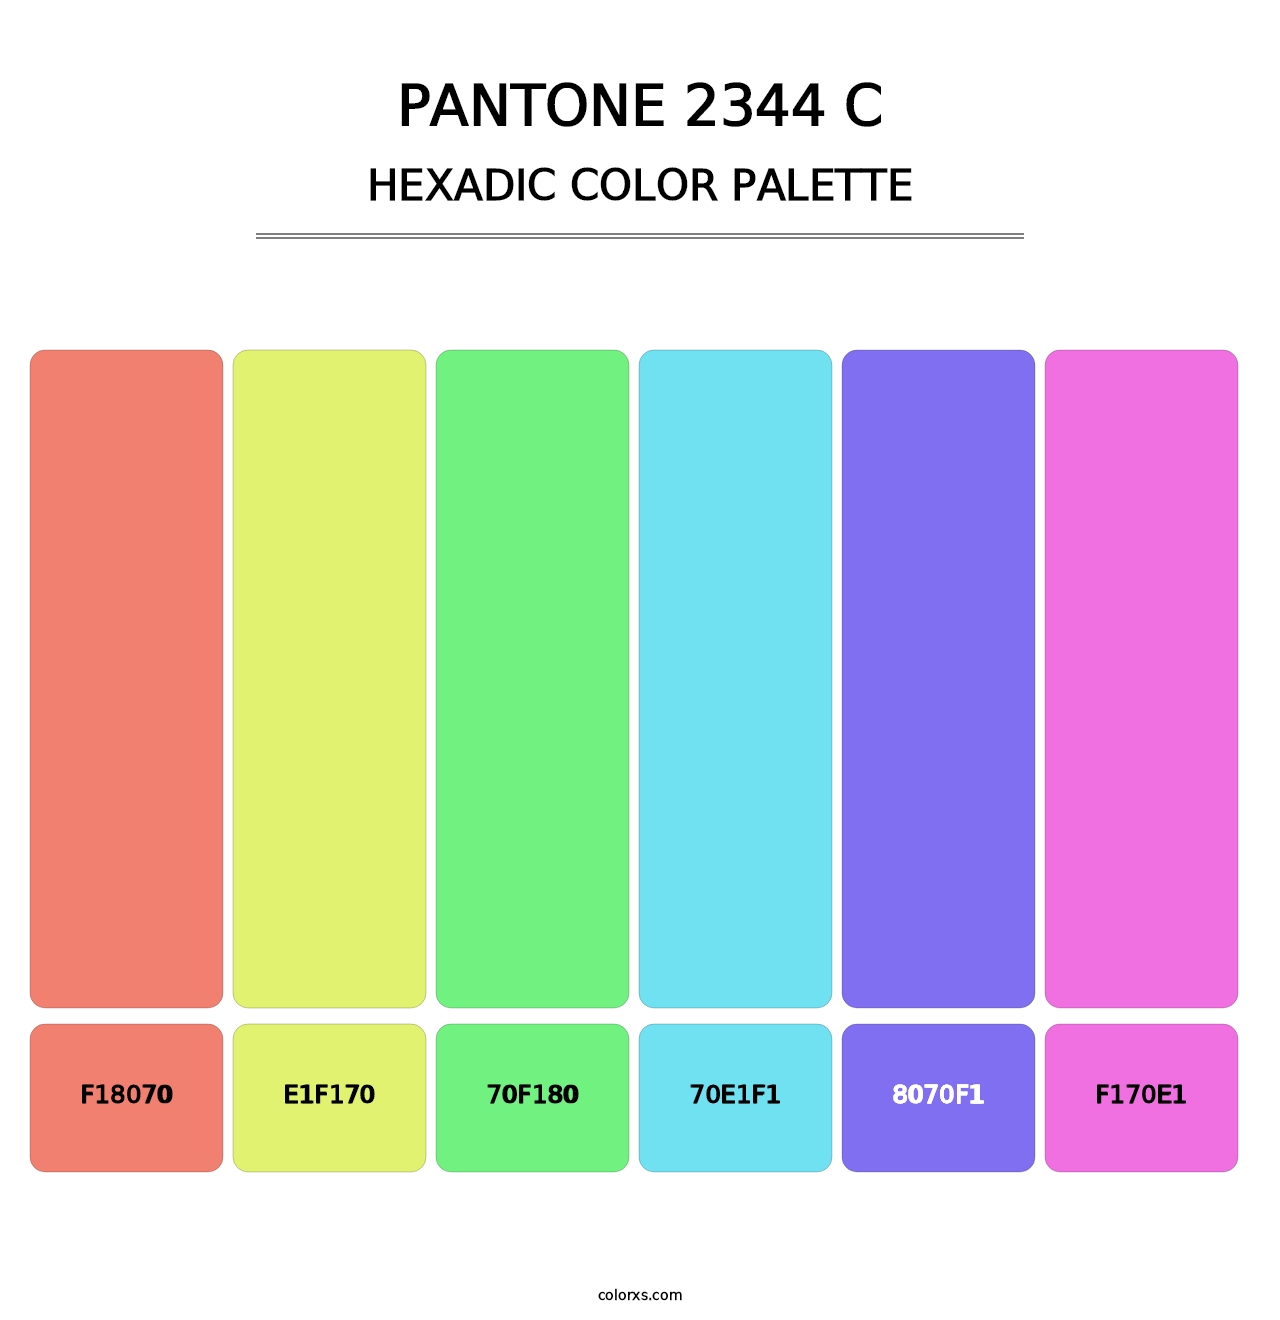 PANTONE 2344 C - Hexadic Color Palette